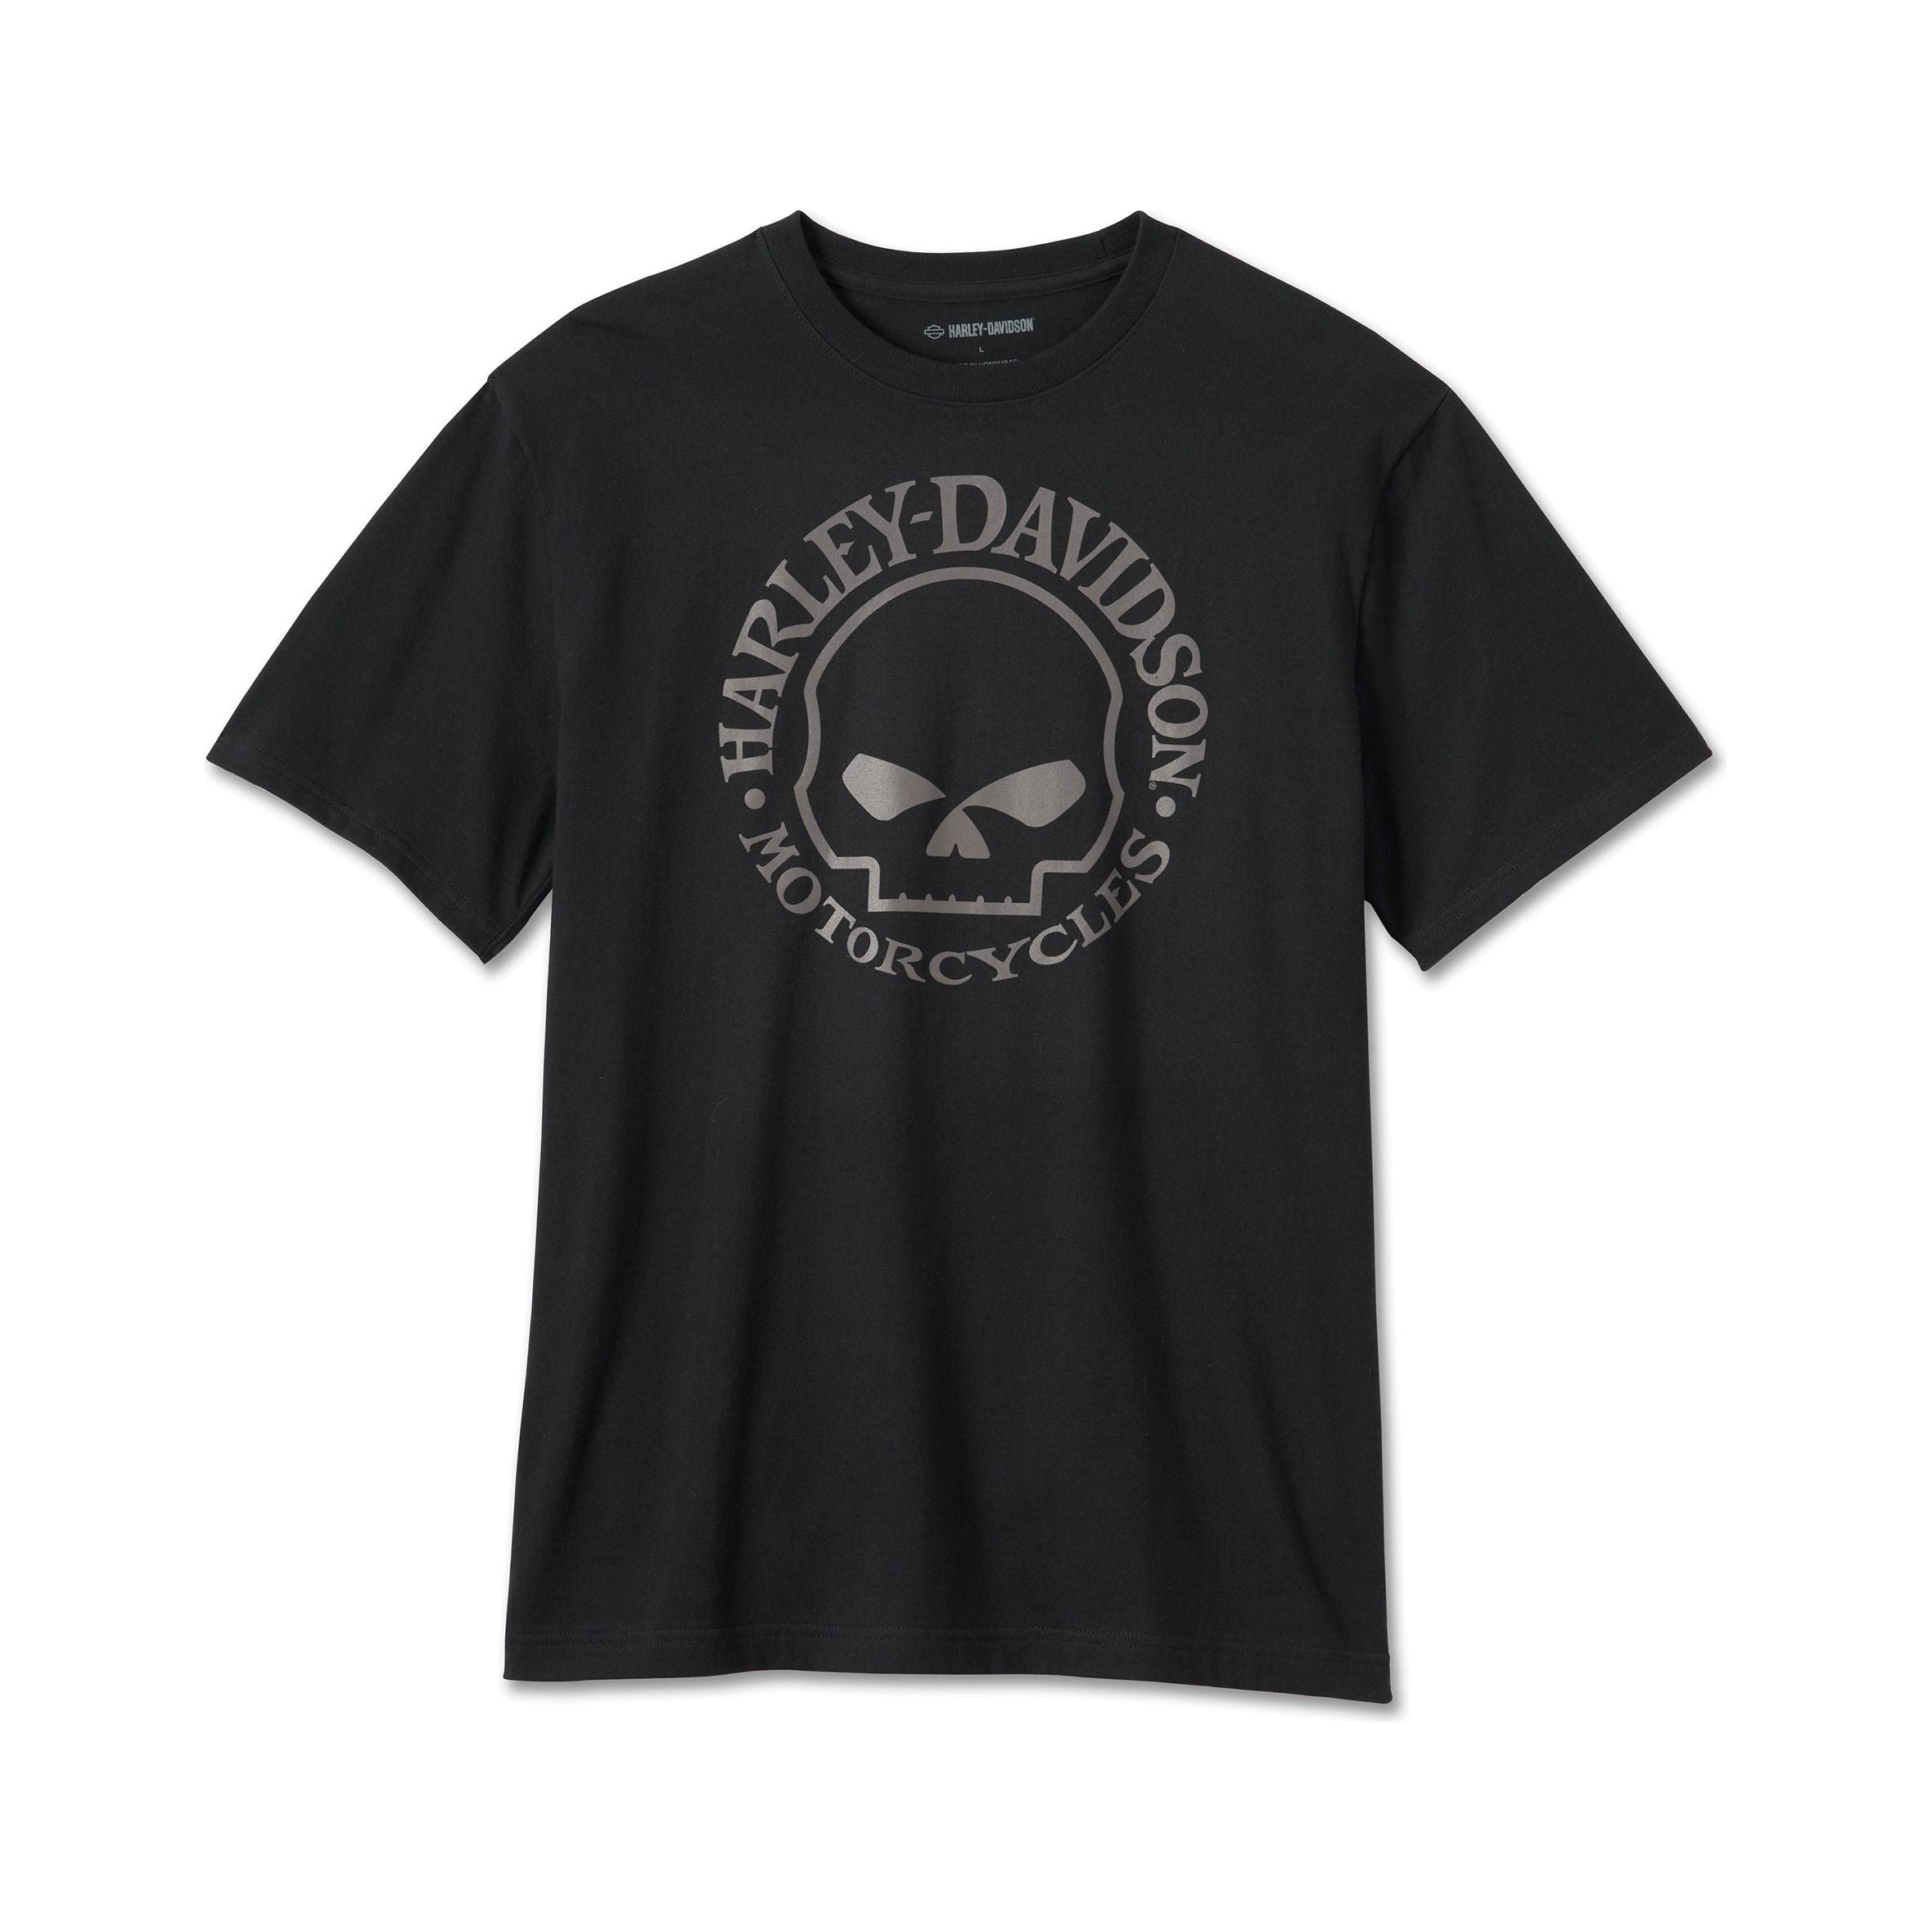 T-shirt à manches longues pour homme Willie G. Skull Harley-Davidson® blanc  - Léo Harley-Davidson®